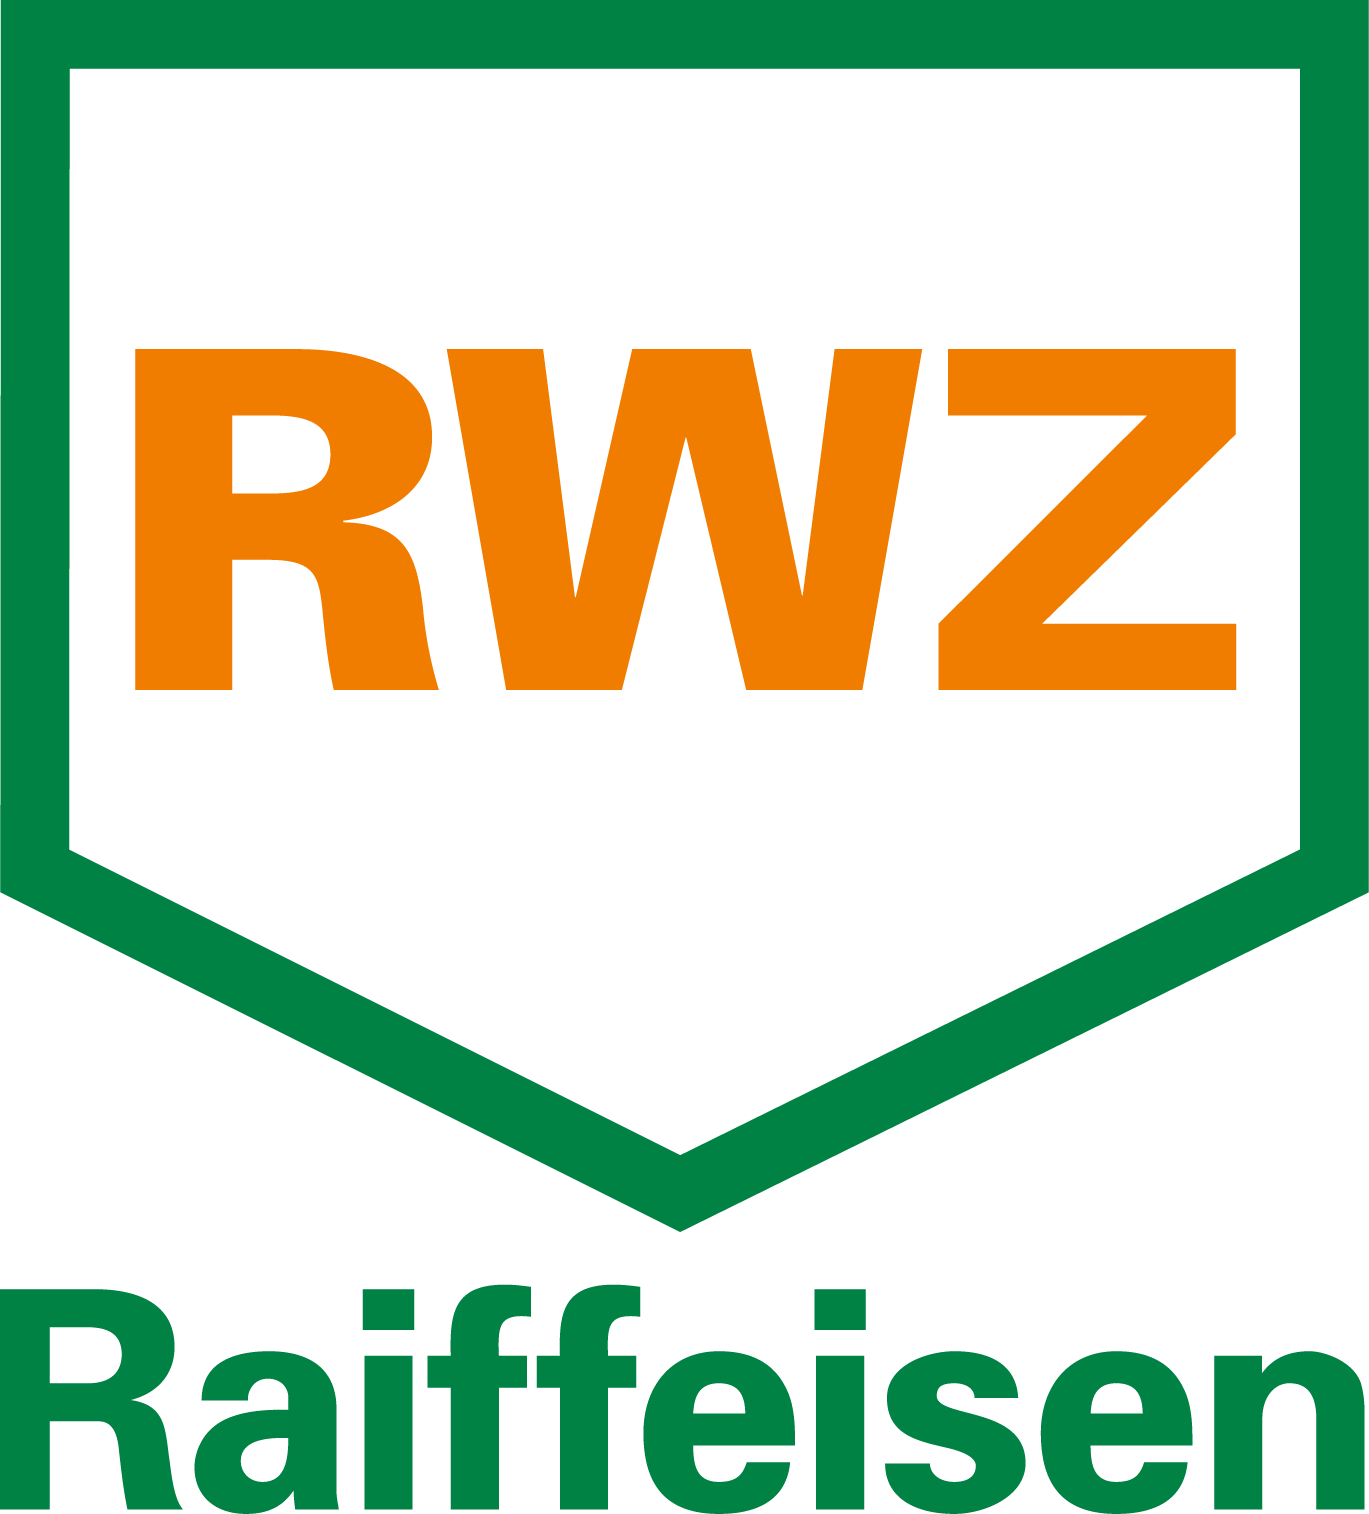 Logo RWZ